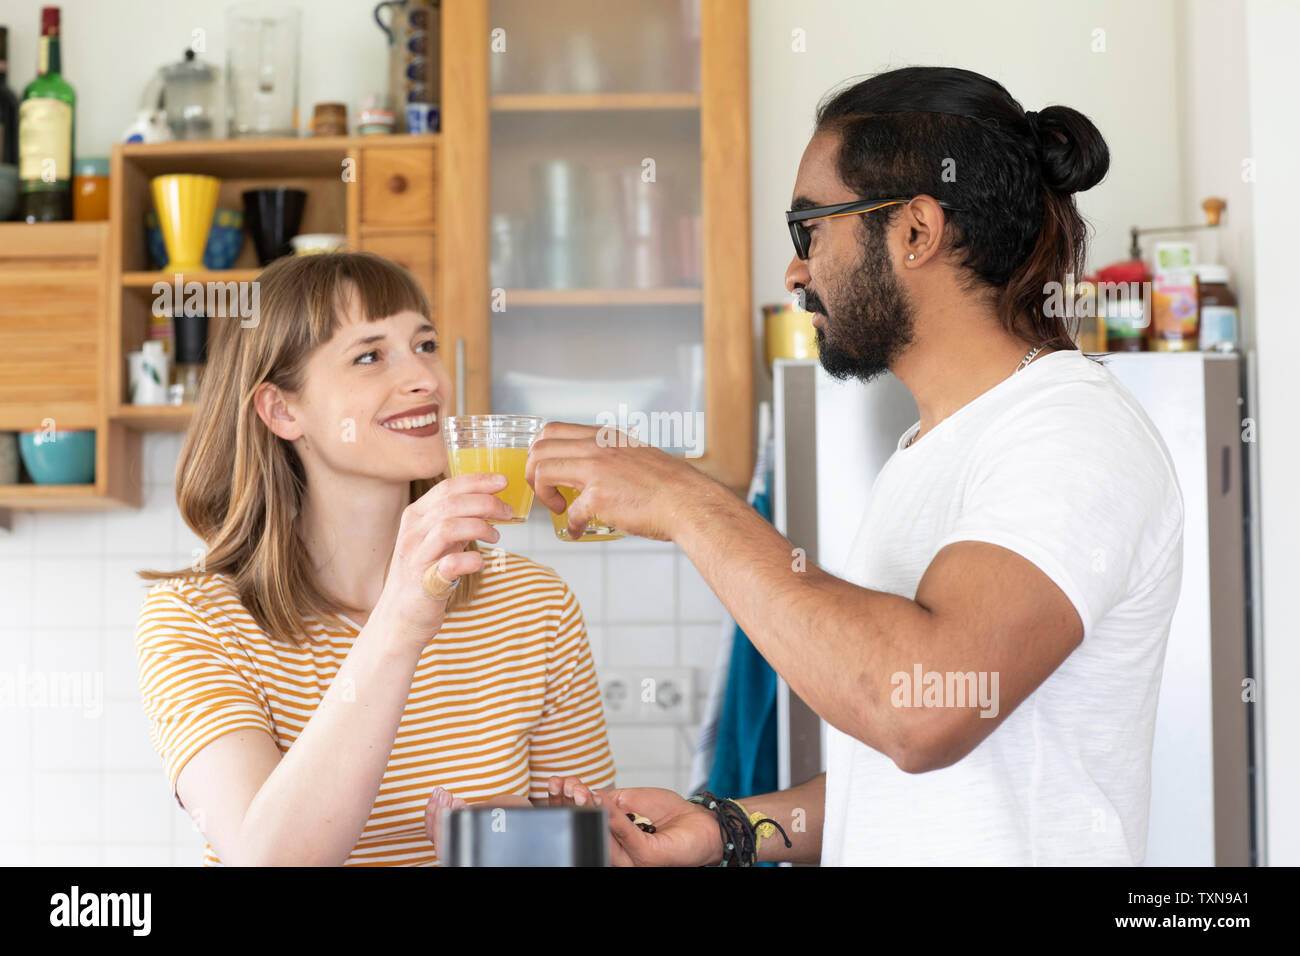 Multi-ethnic couple toasting with juice in kitchen Stock Photo